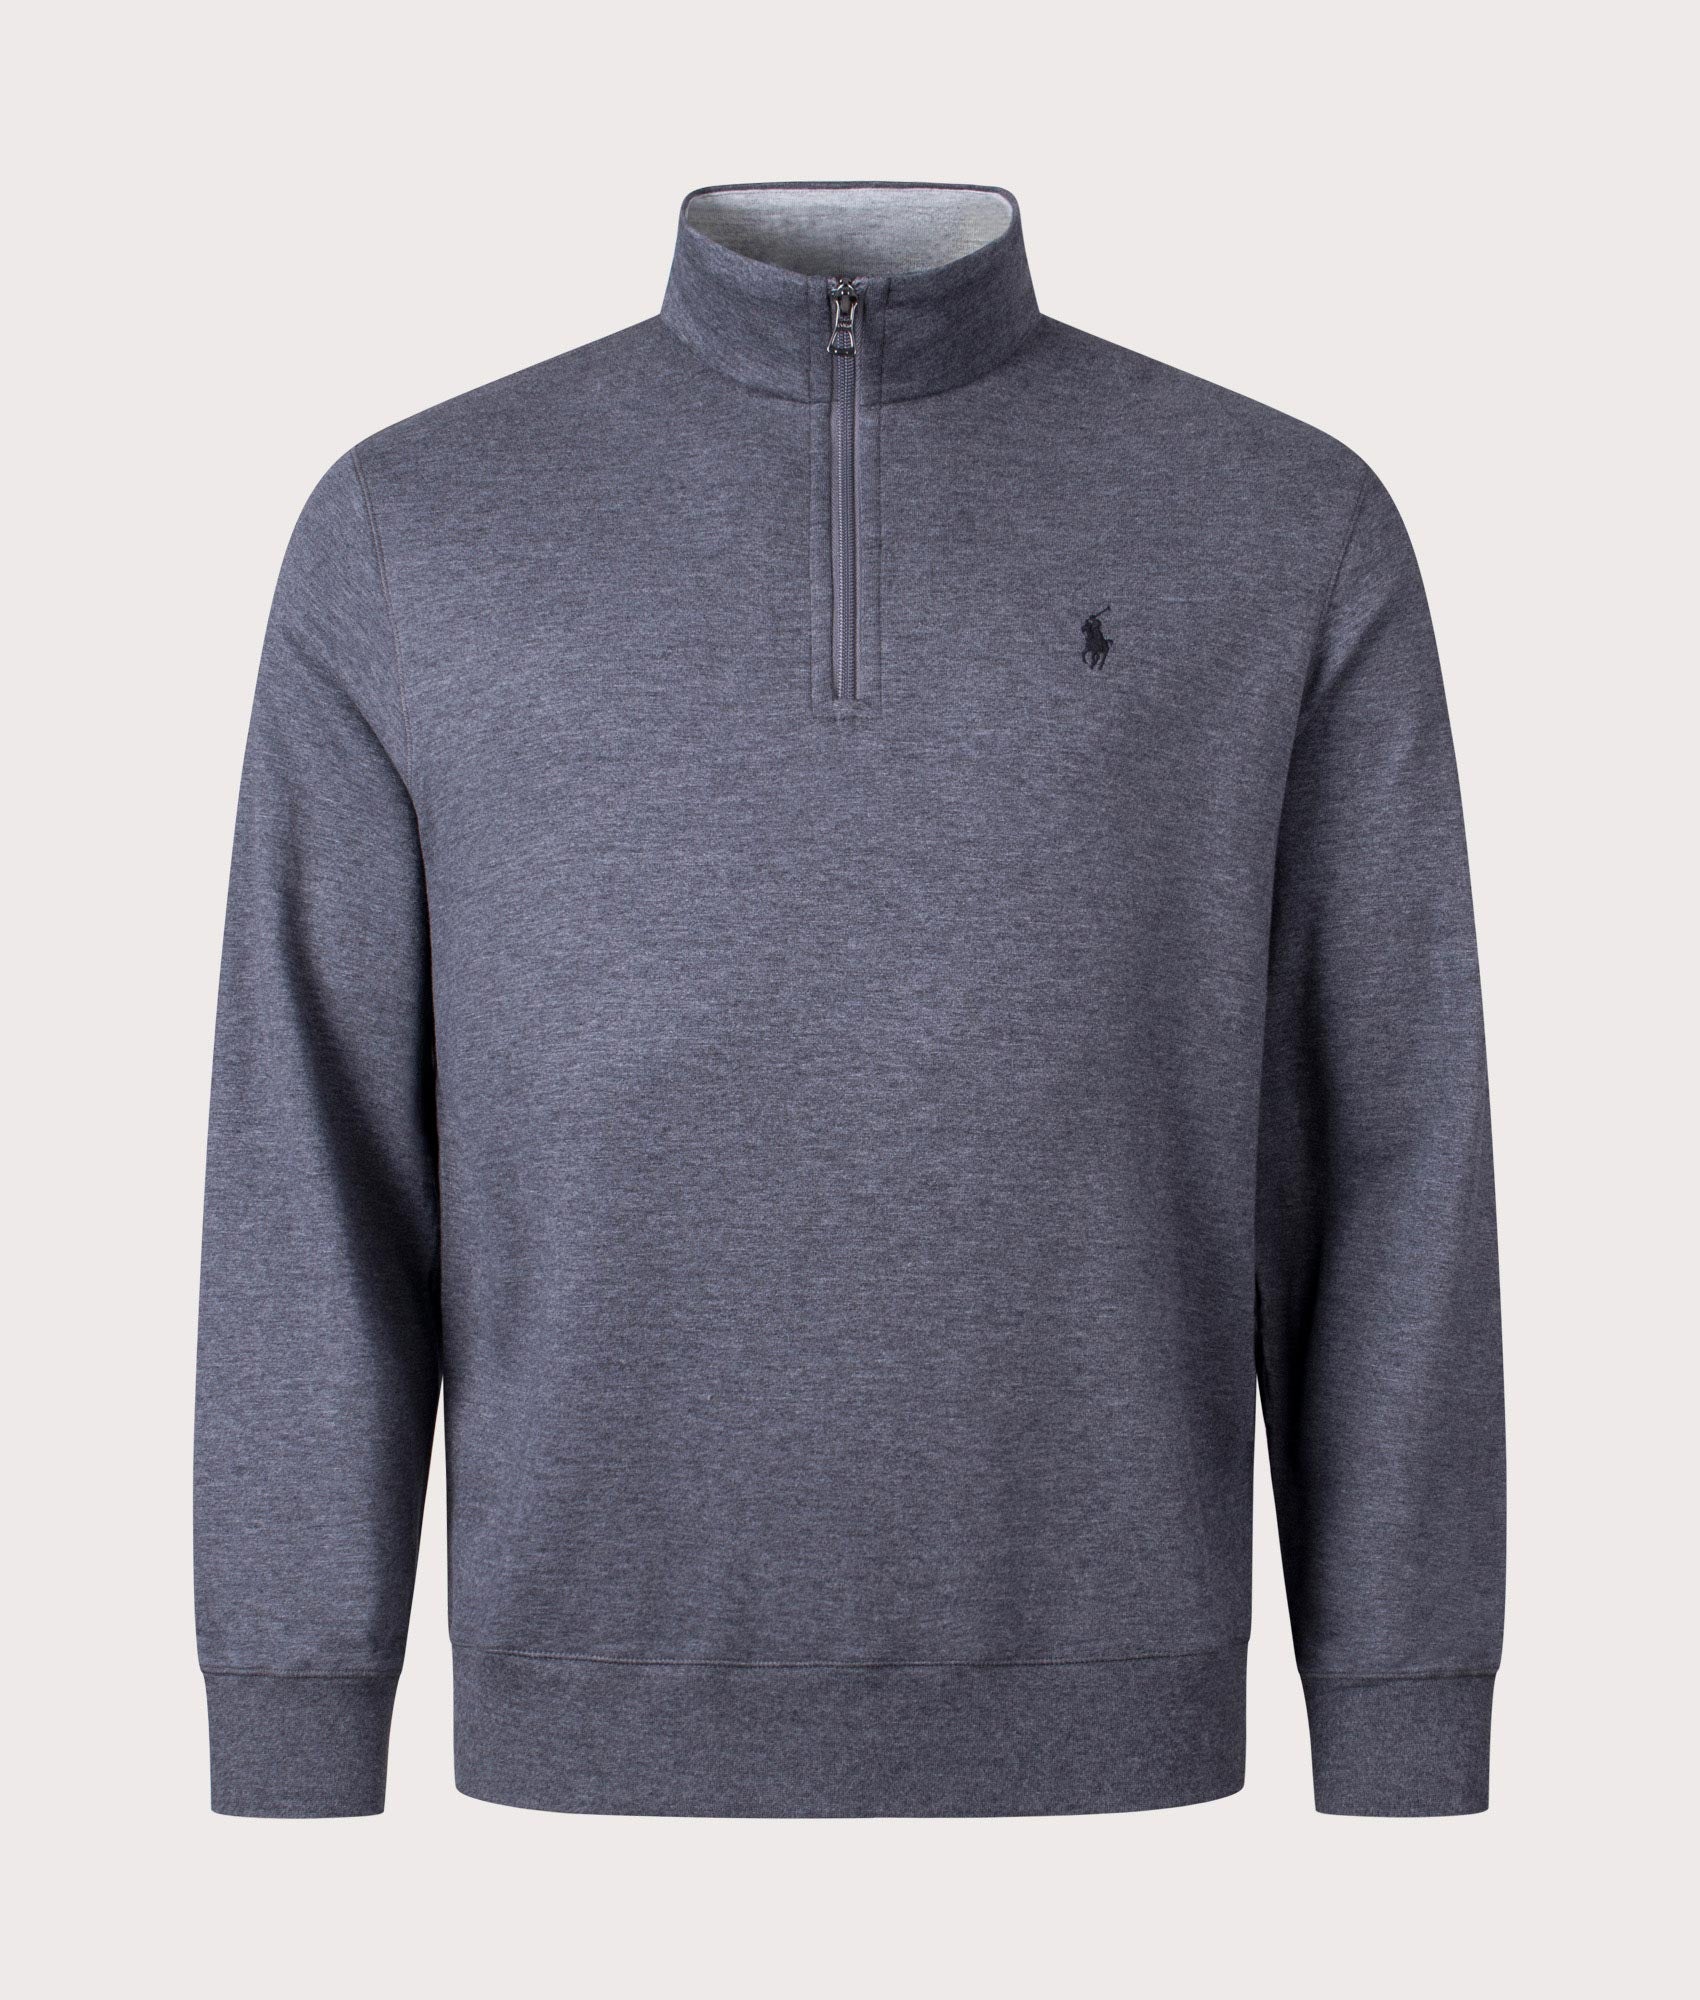 Polo Ralph Lauren Mens Quarter Zip Sweatshirt - Colour: 052 Barclay Heather - Size: Medium